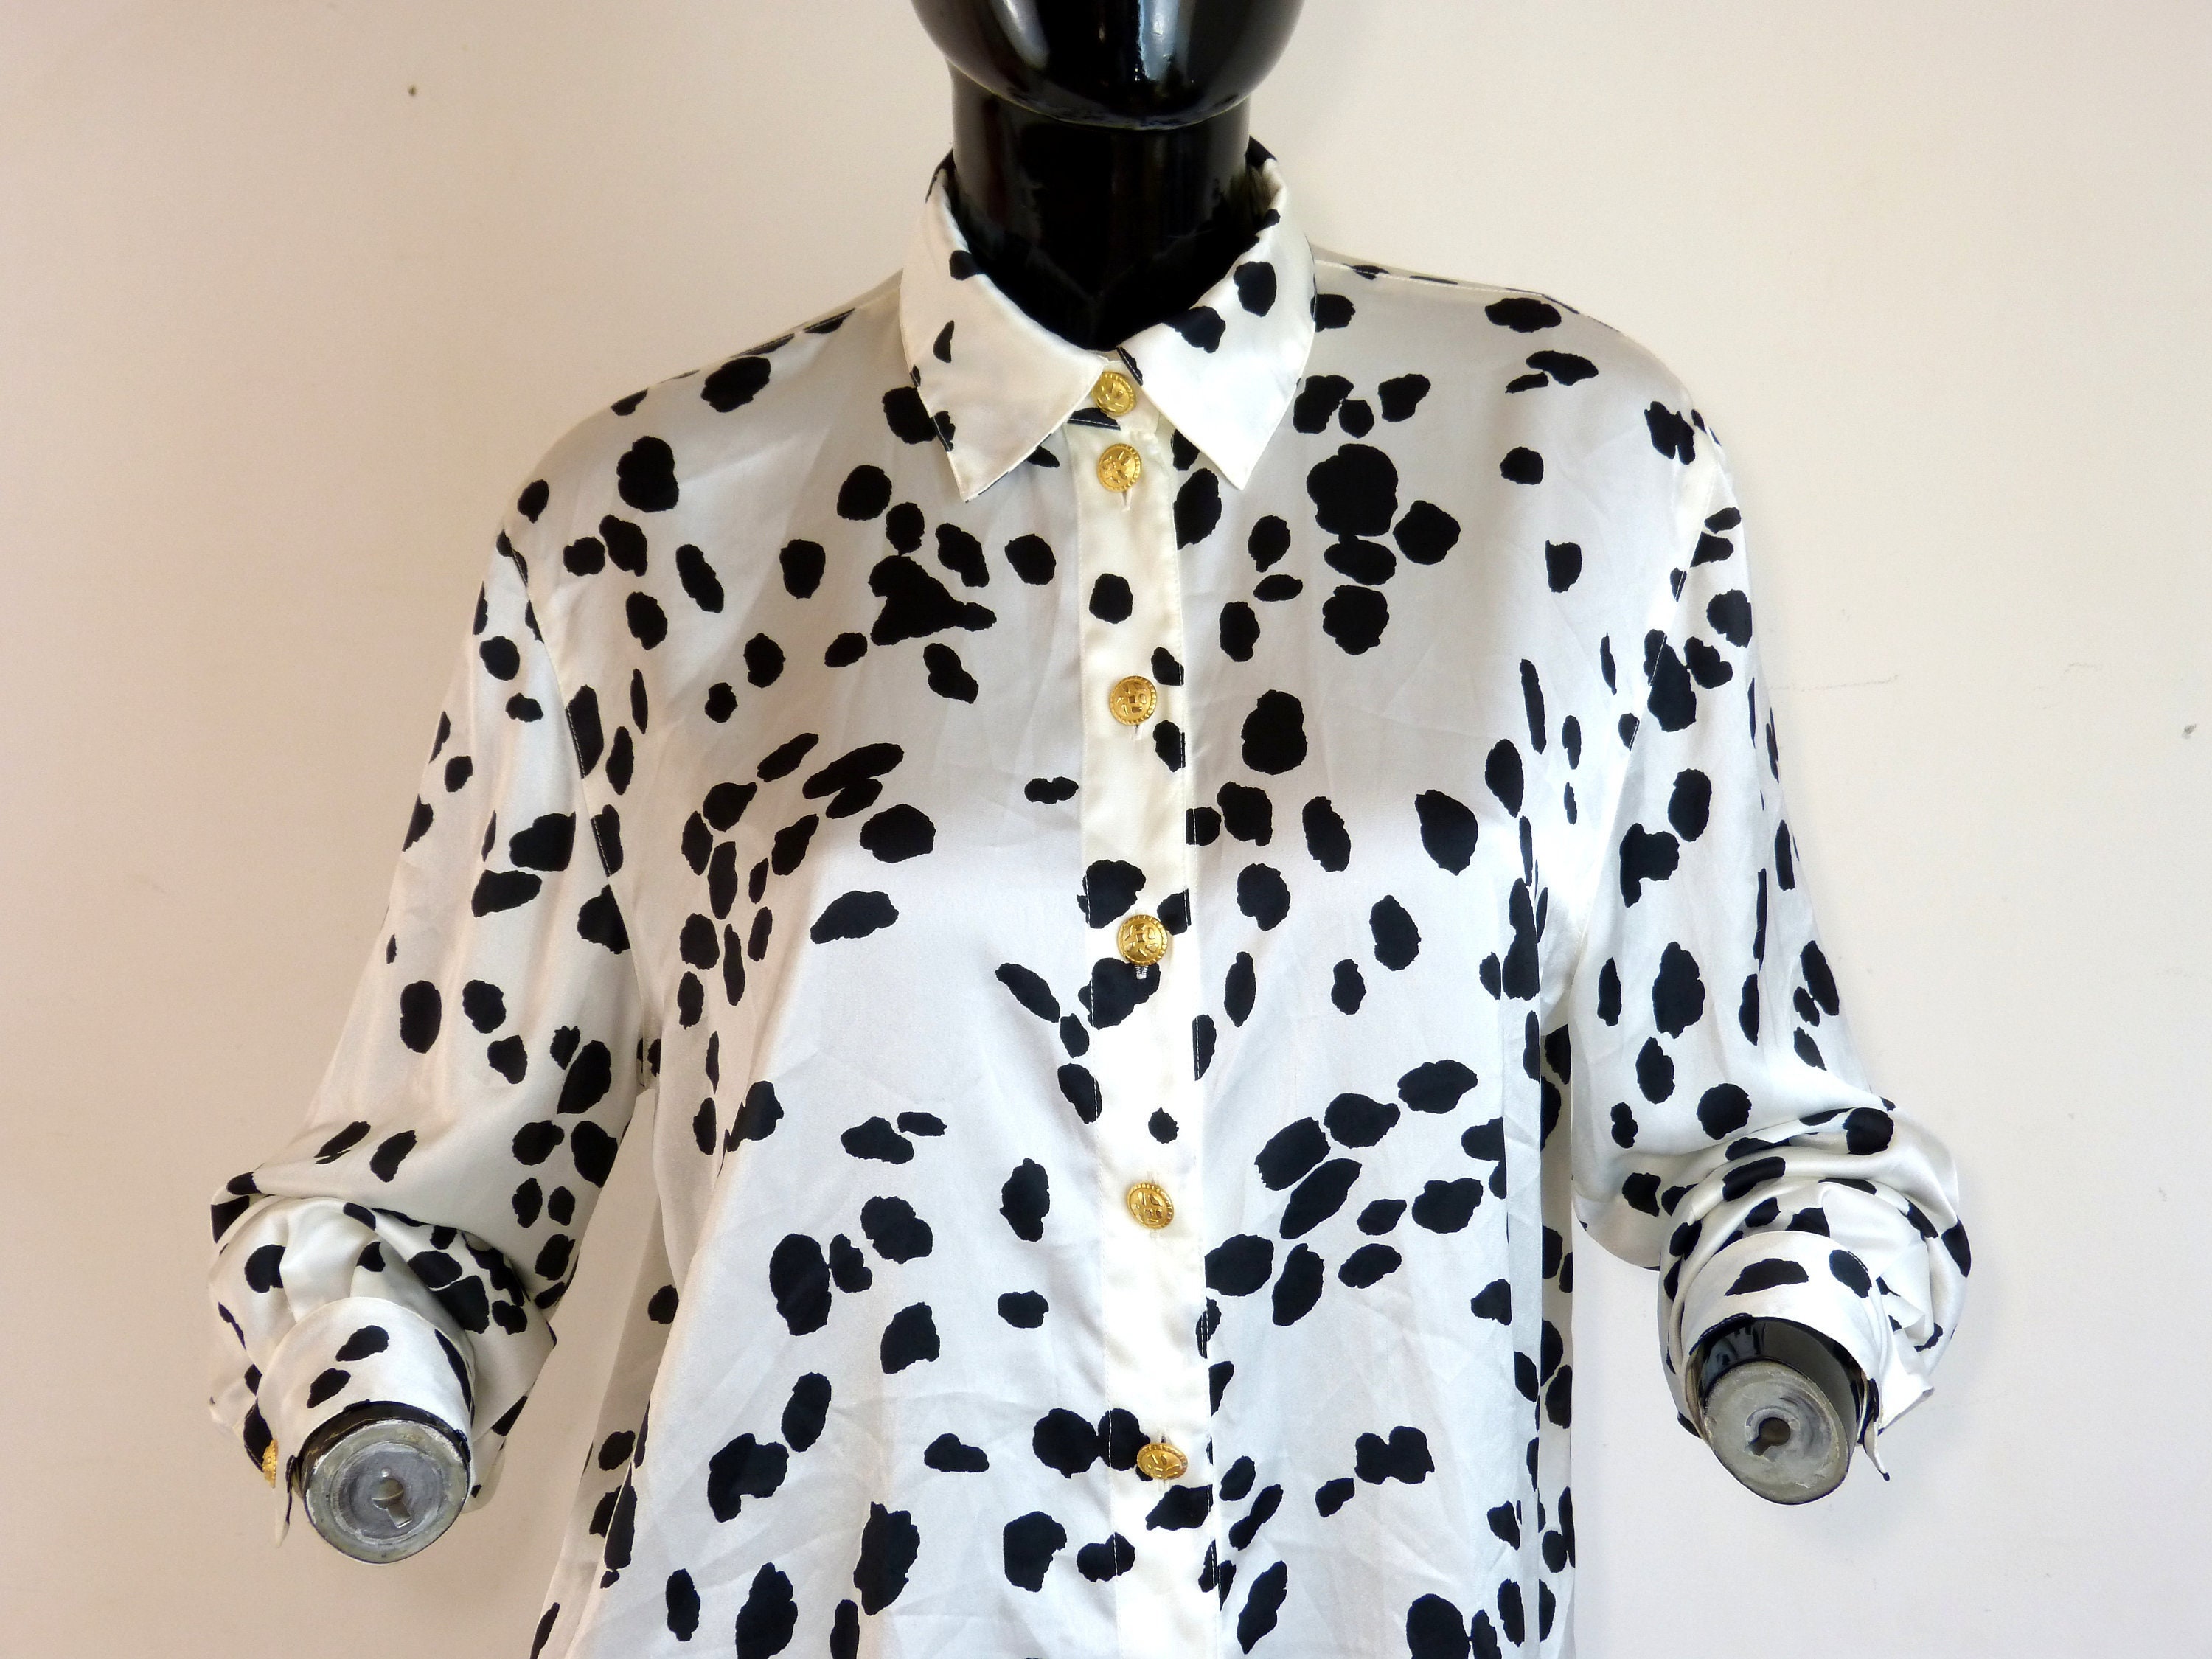 LOUIS FERAUD Vintage Jacket Jewel Buttons Black & White Check 80s